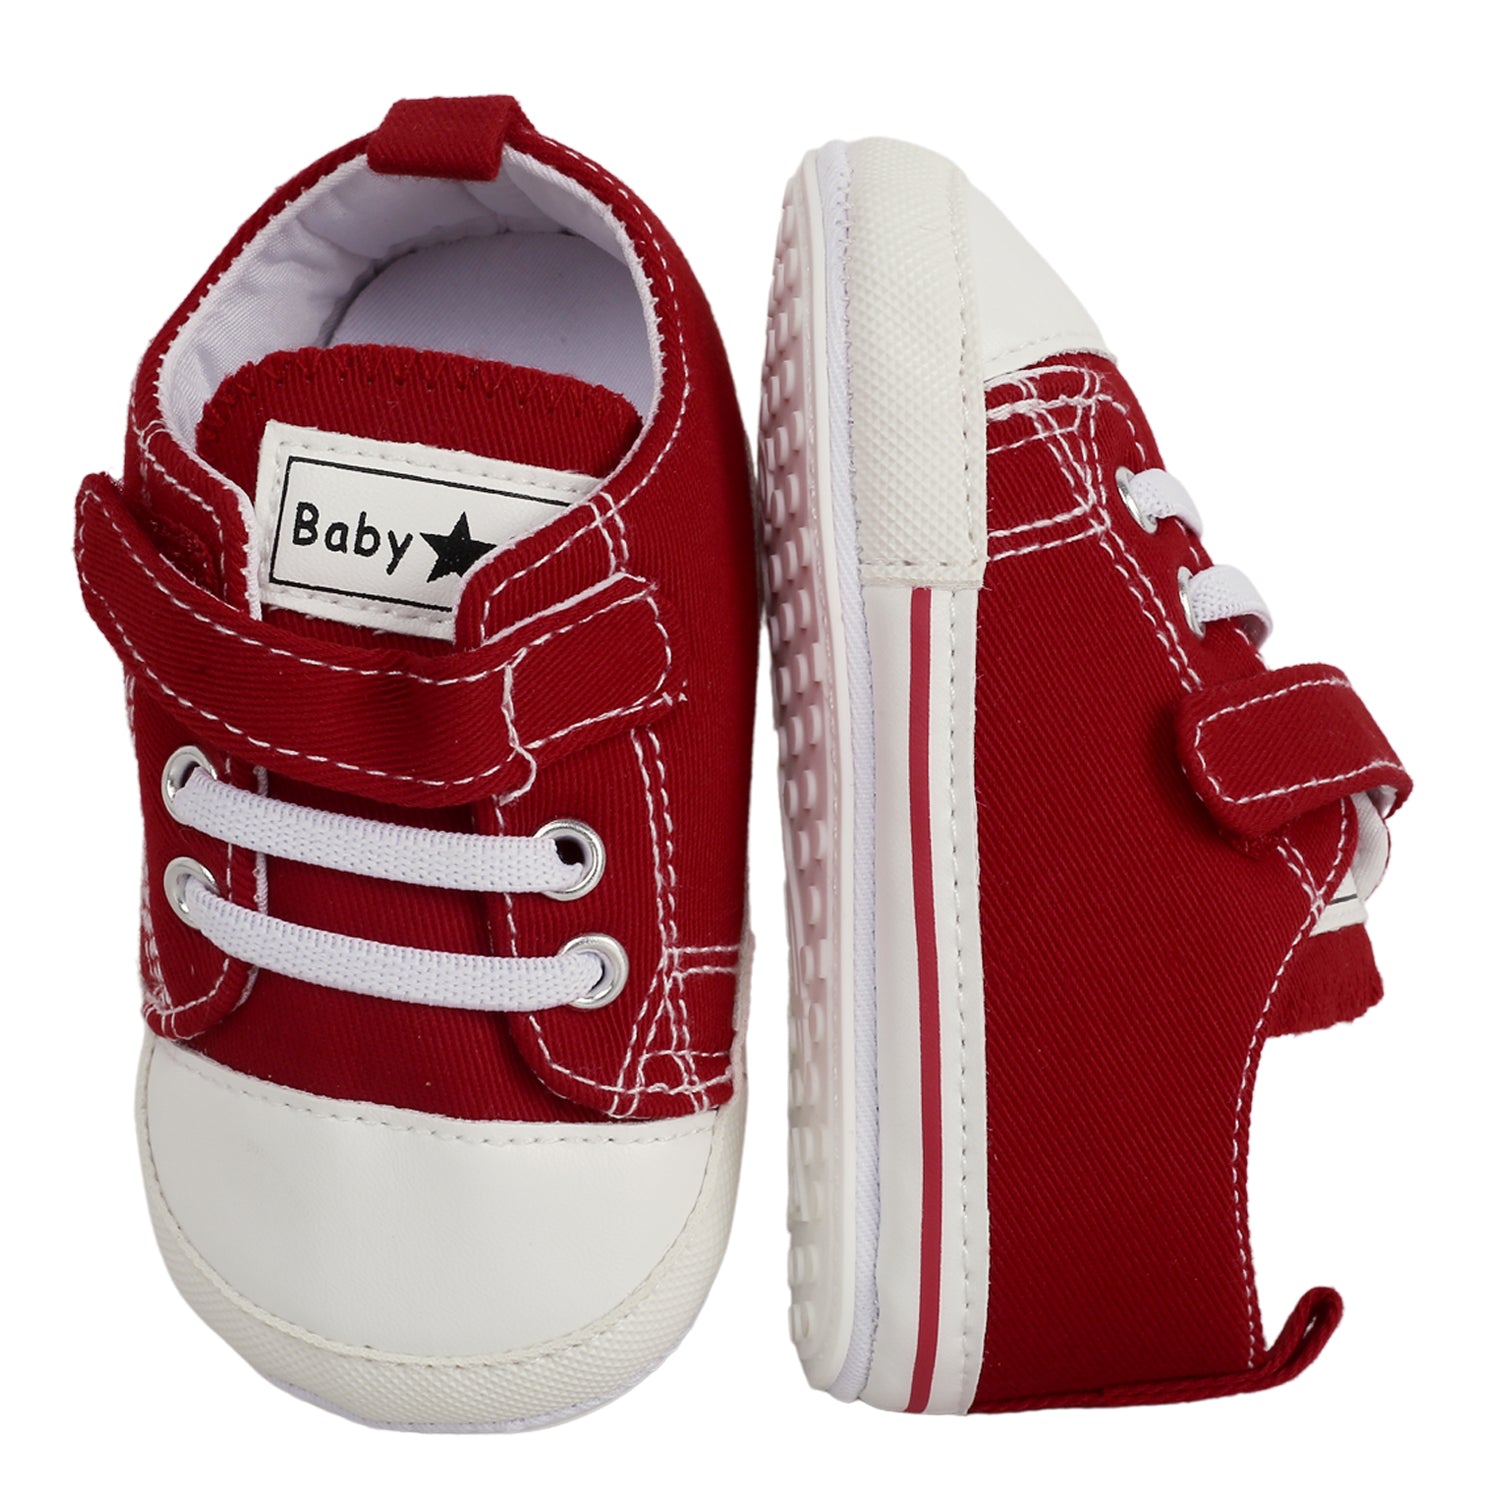 Baby Moo Celebration Themed Alia's Raha 30 Pcs Luxury Gift Hamper Red - 0-18M Sizes Available - Baby Moo